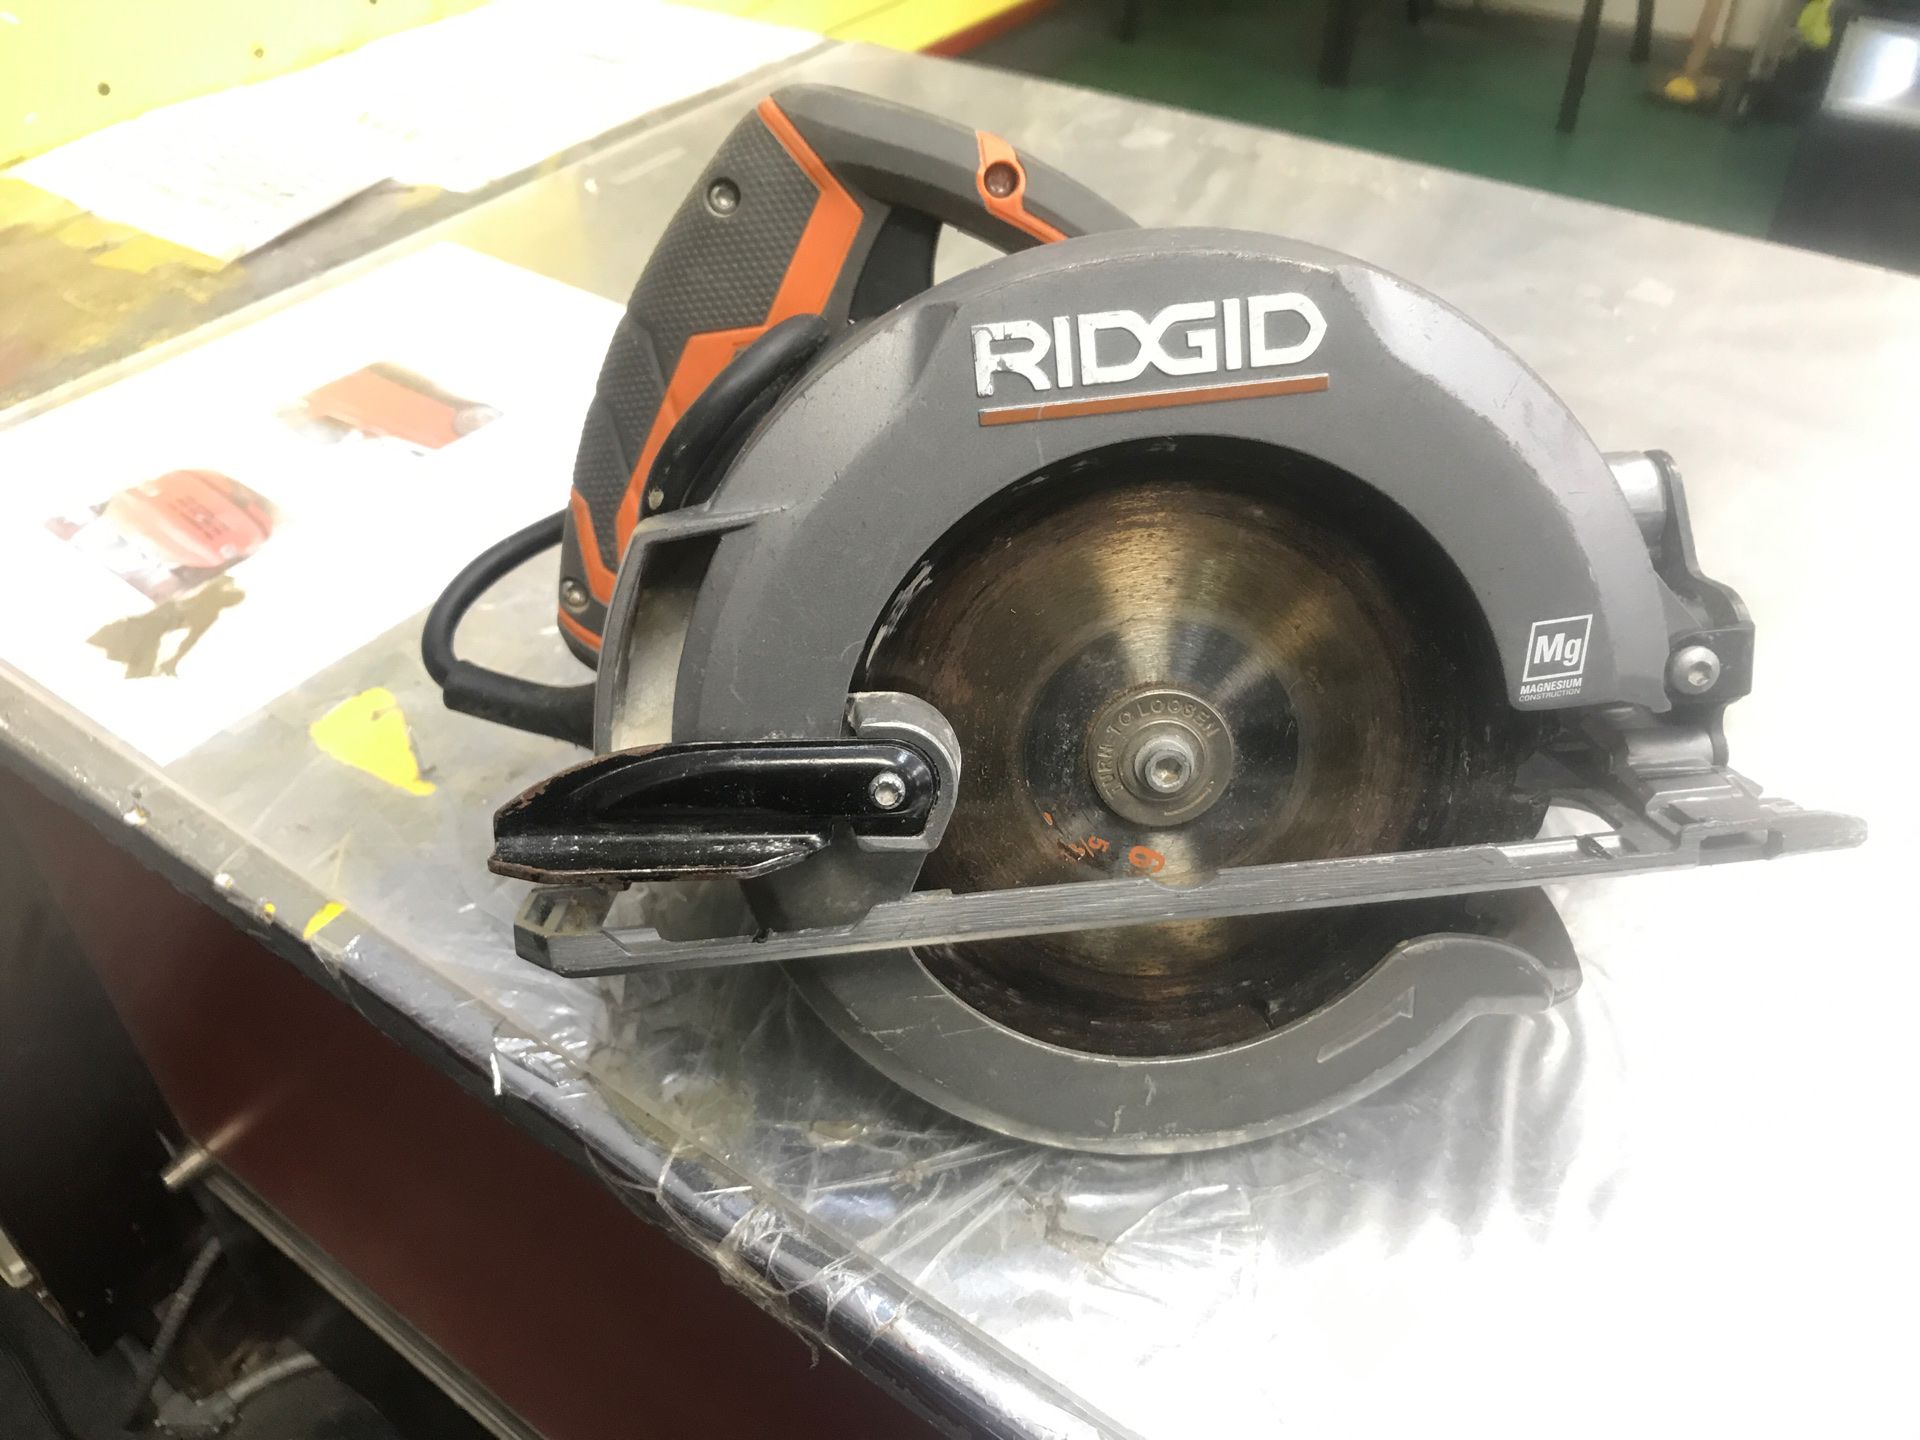 Ridgid circular saw